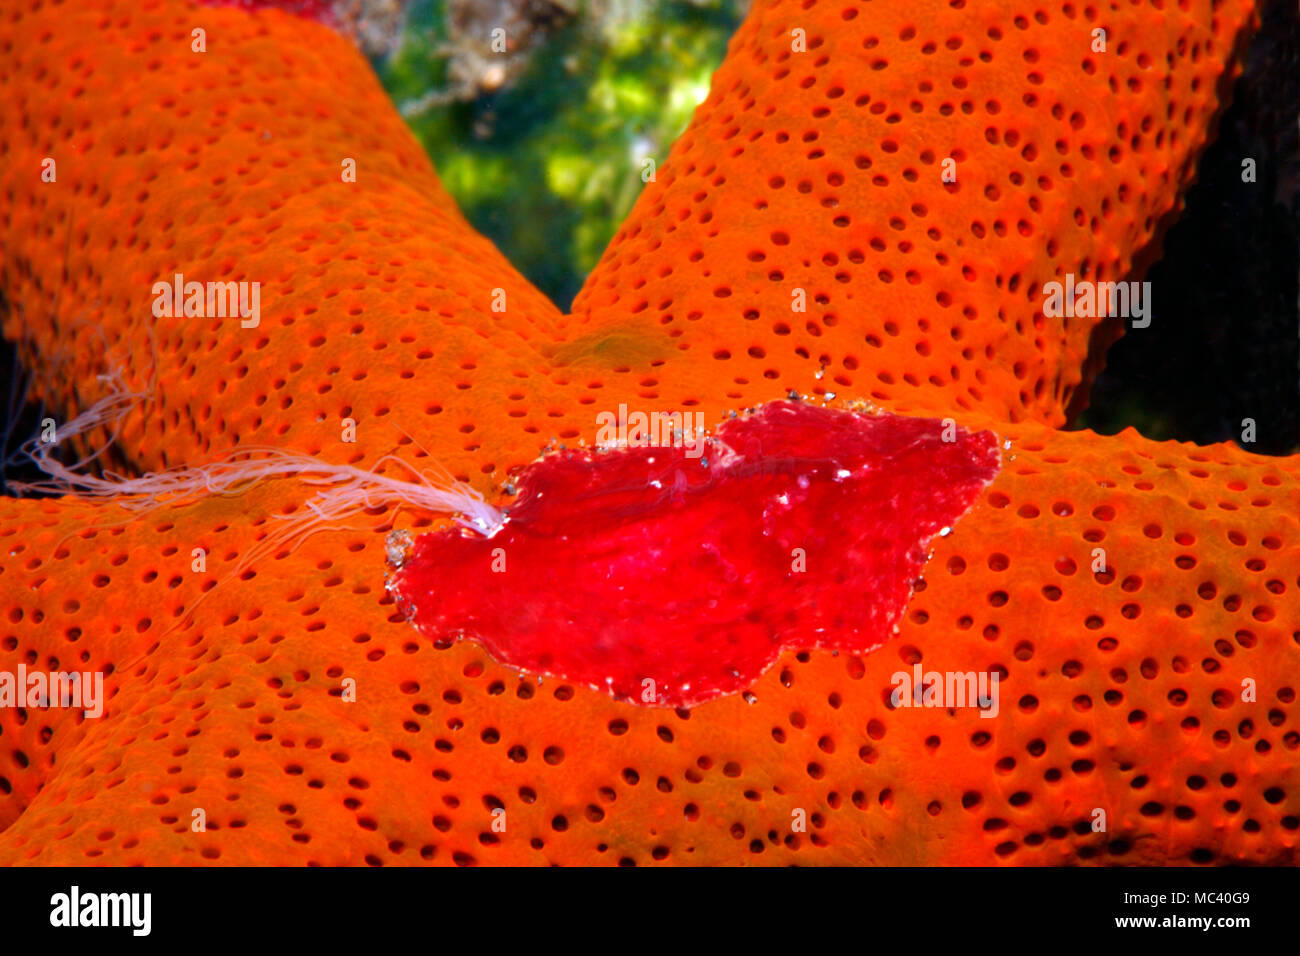 Platyctenid Ctenophore, or Creeping Comb Jelly, Coeloplana astericola, living on a sea star, Echinaster luzonicus. Tulamben, Bali, Indonesia. Bali Sea Stock Photo